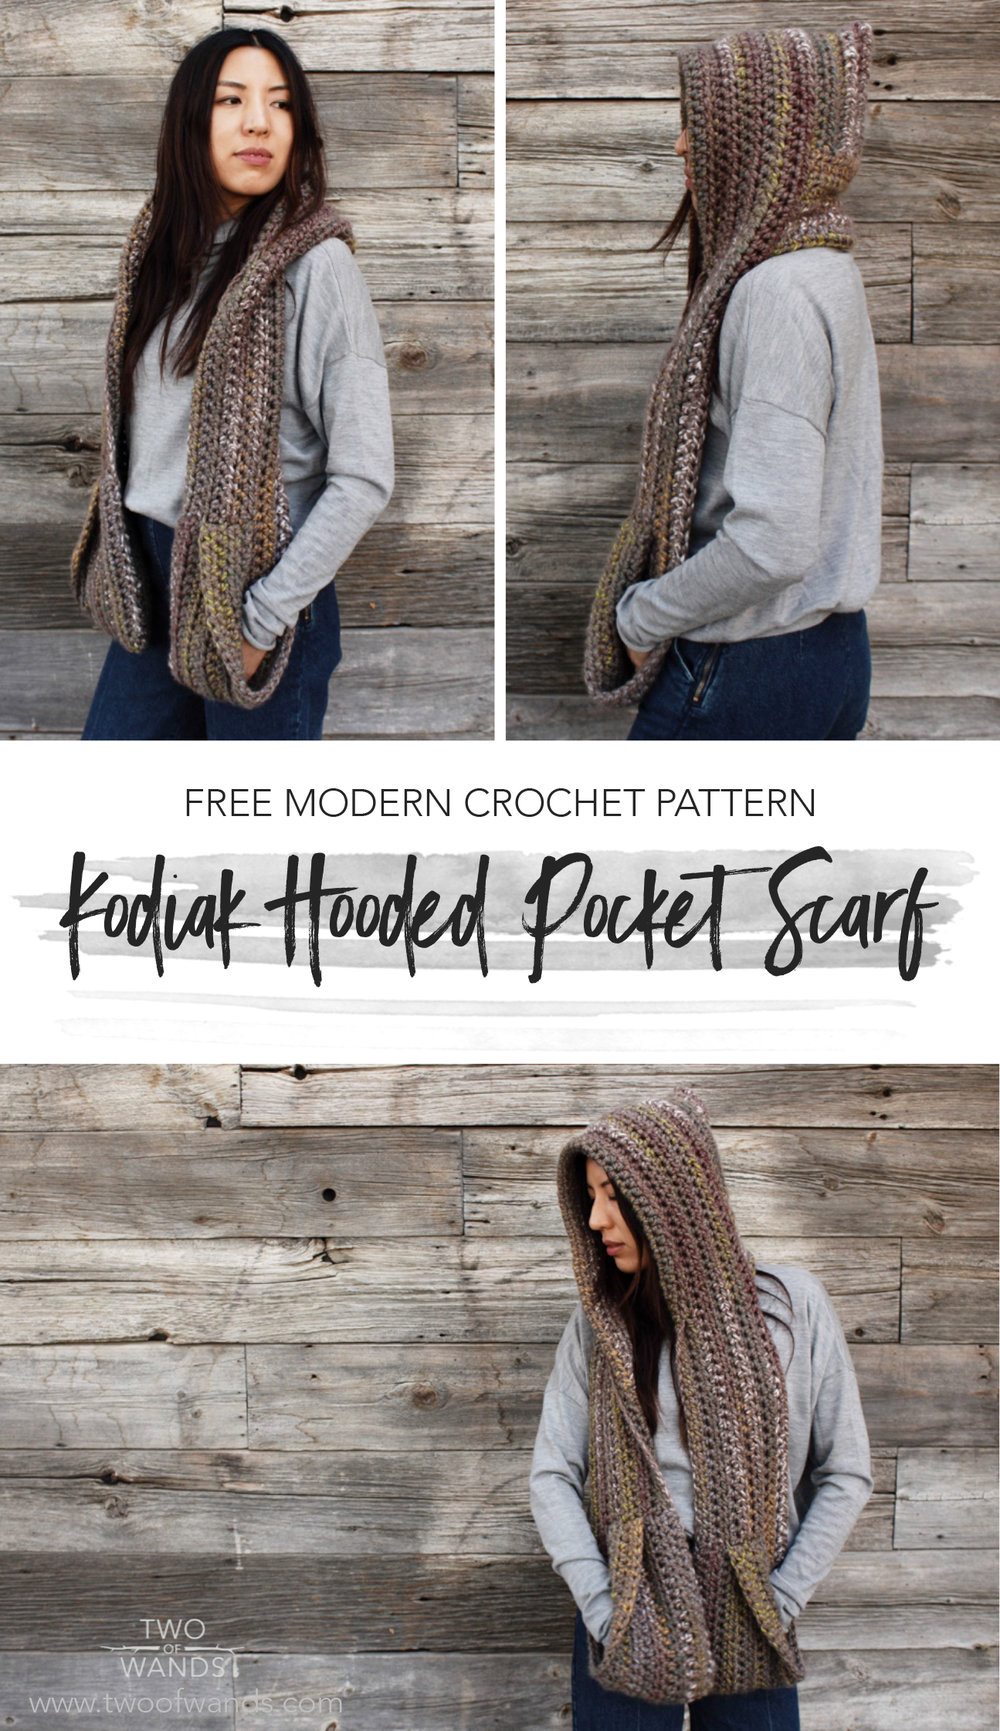 Kodiak Hooded Pocket Scarf pattern by Two of Wands